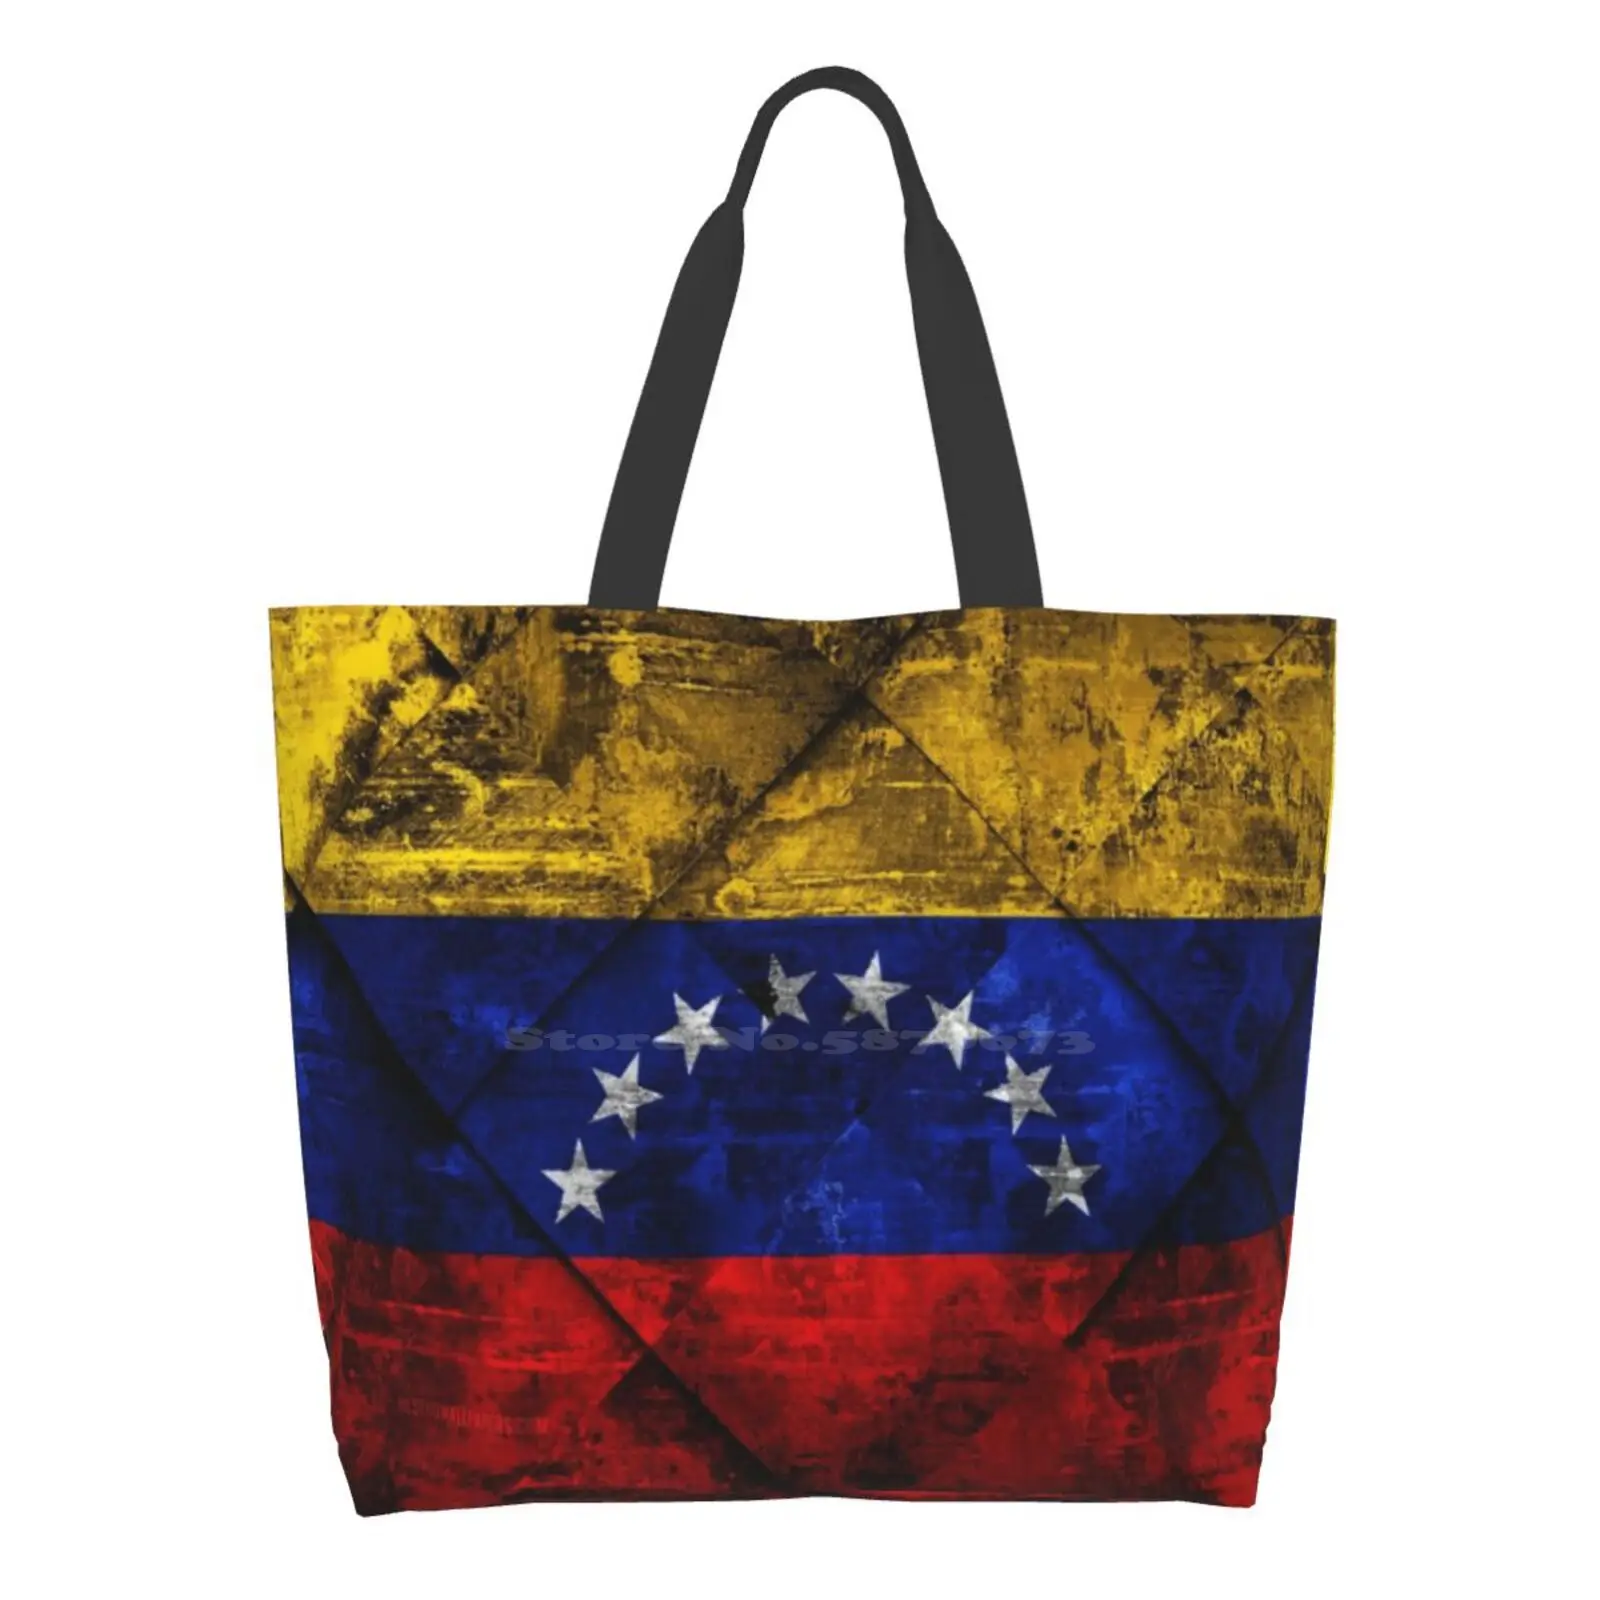 

Free Venezuela, Venezuela Flag With Cool Crystal Texture Women Shopping Bag Girl Tote Large Size Venezuela Free Jdm Patriot